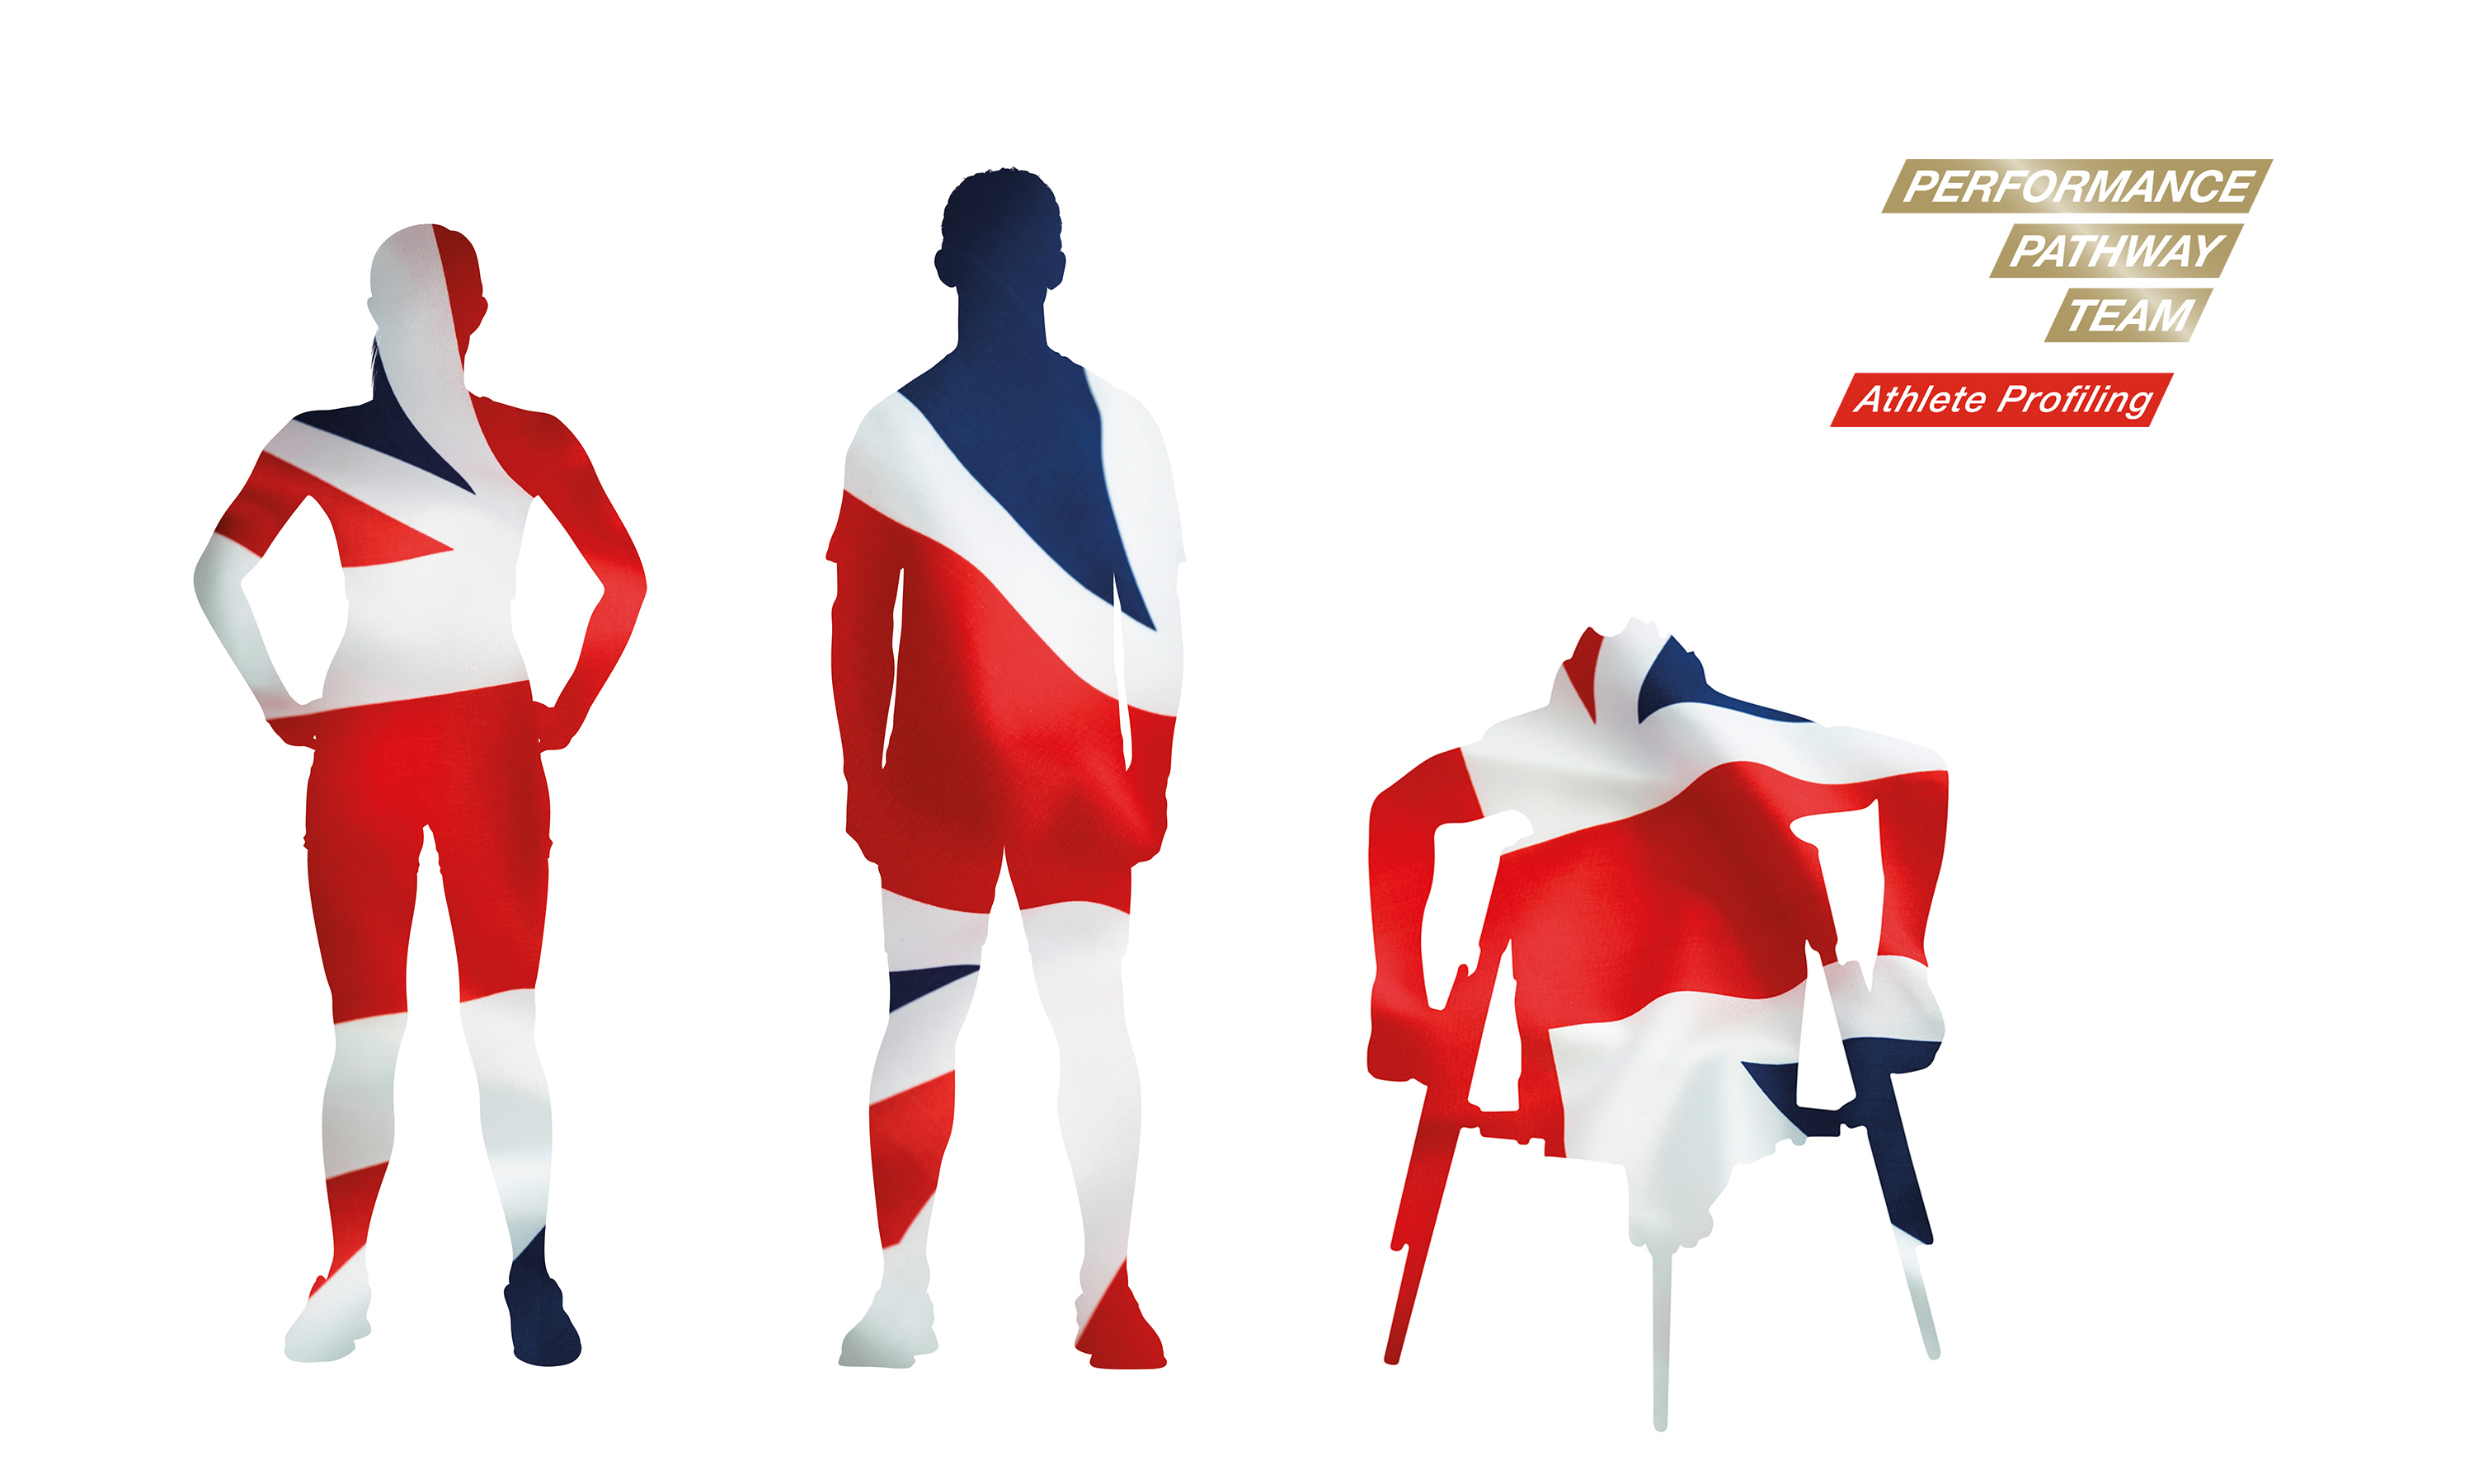 Branding by Neon - Sports branding - UK Sport Performance Pathway Team rebrand - graphic athlete silhouettes designed by Dana Robertson